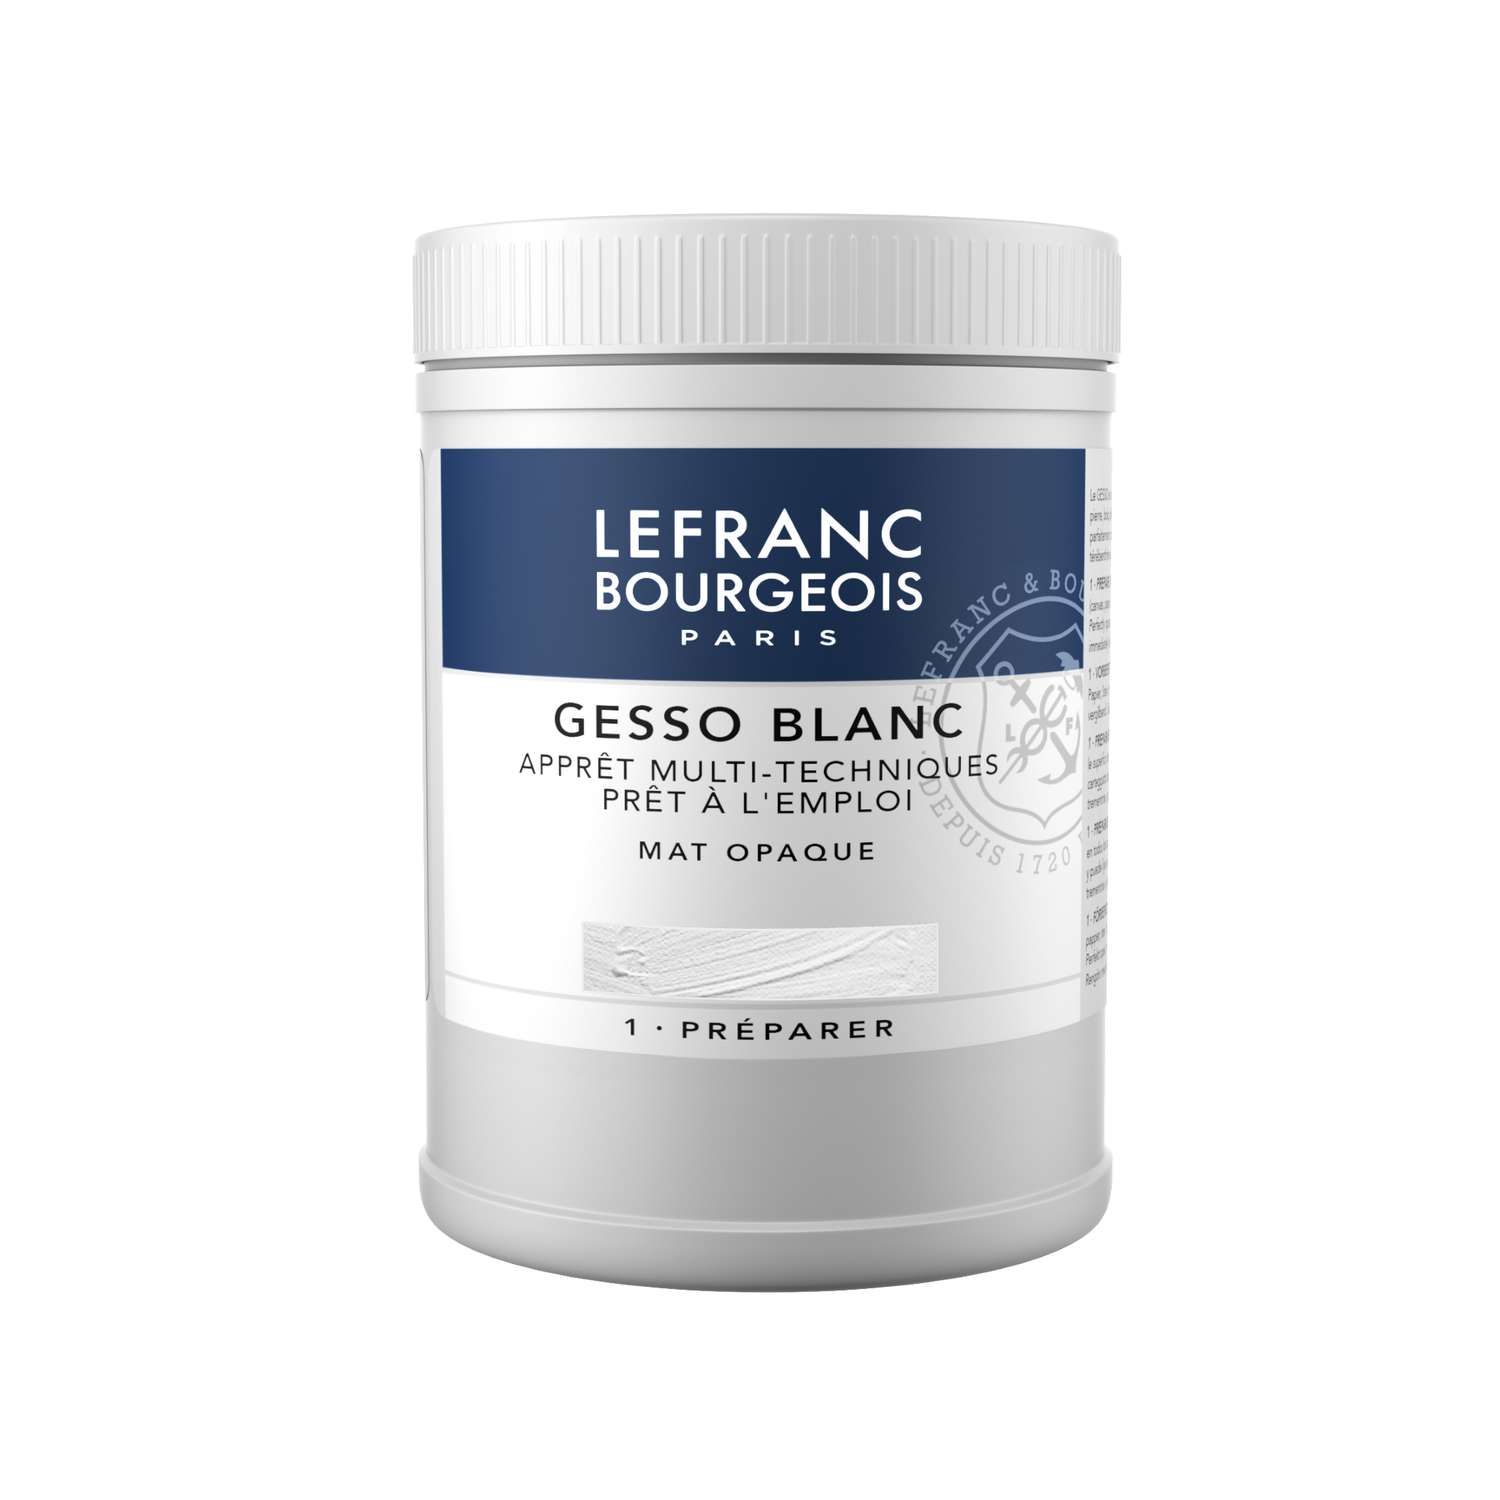 Gesso blanc LEFRANC & BOURGEOIS, mat opaque